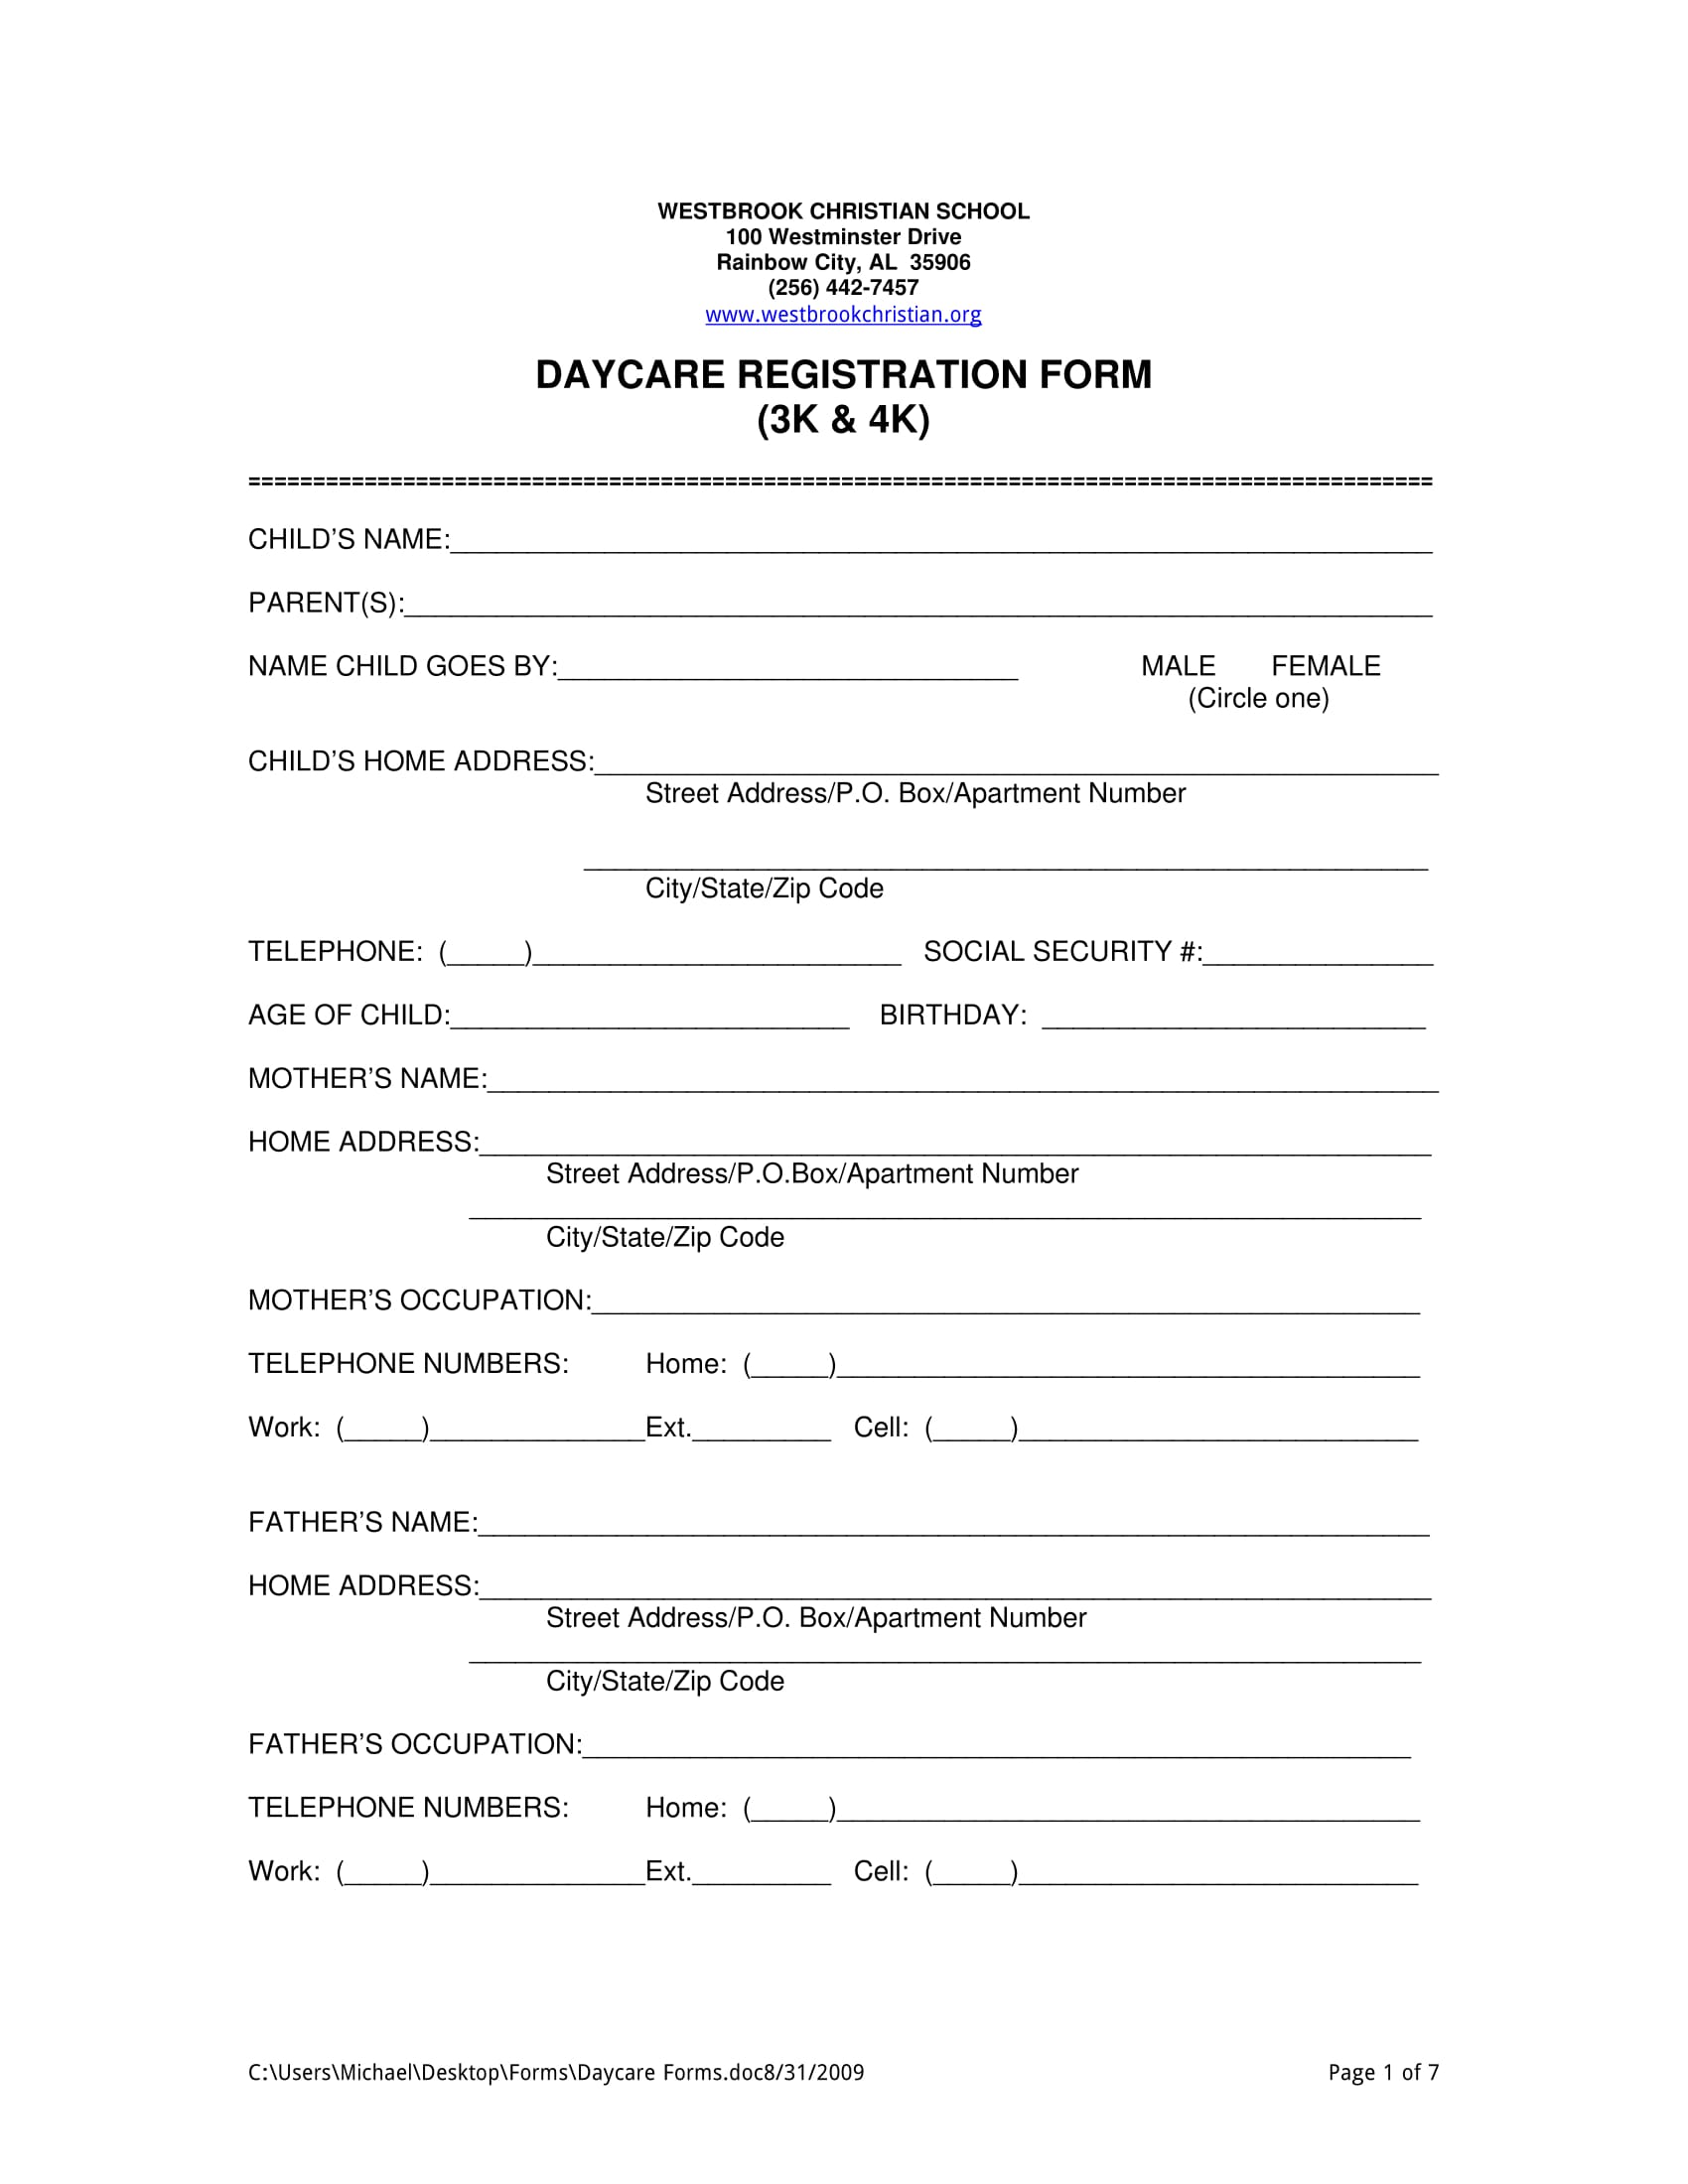 christian school daycare registration form 11